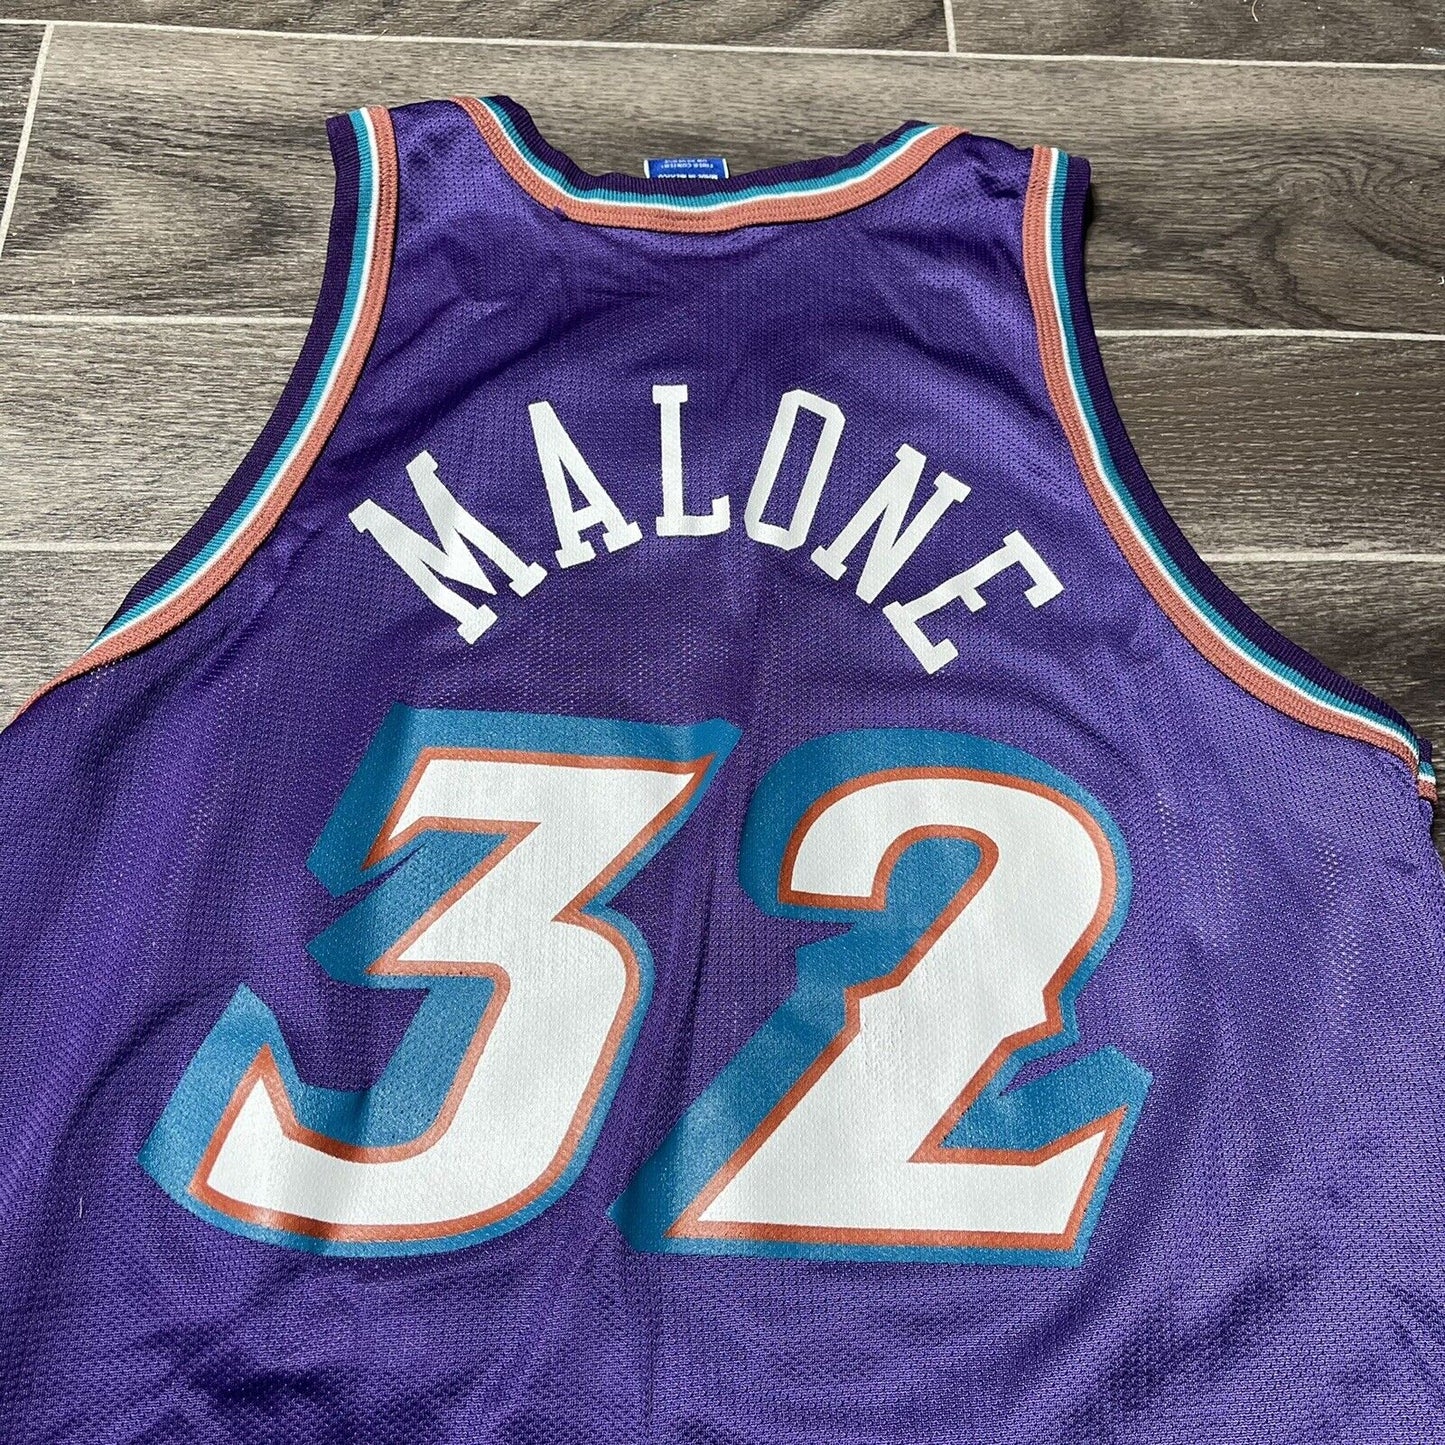 vintage 1990s Karl Malone Jazz Champion jersey, Purple Size 40